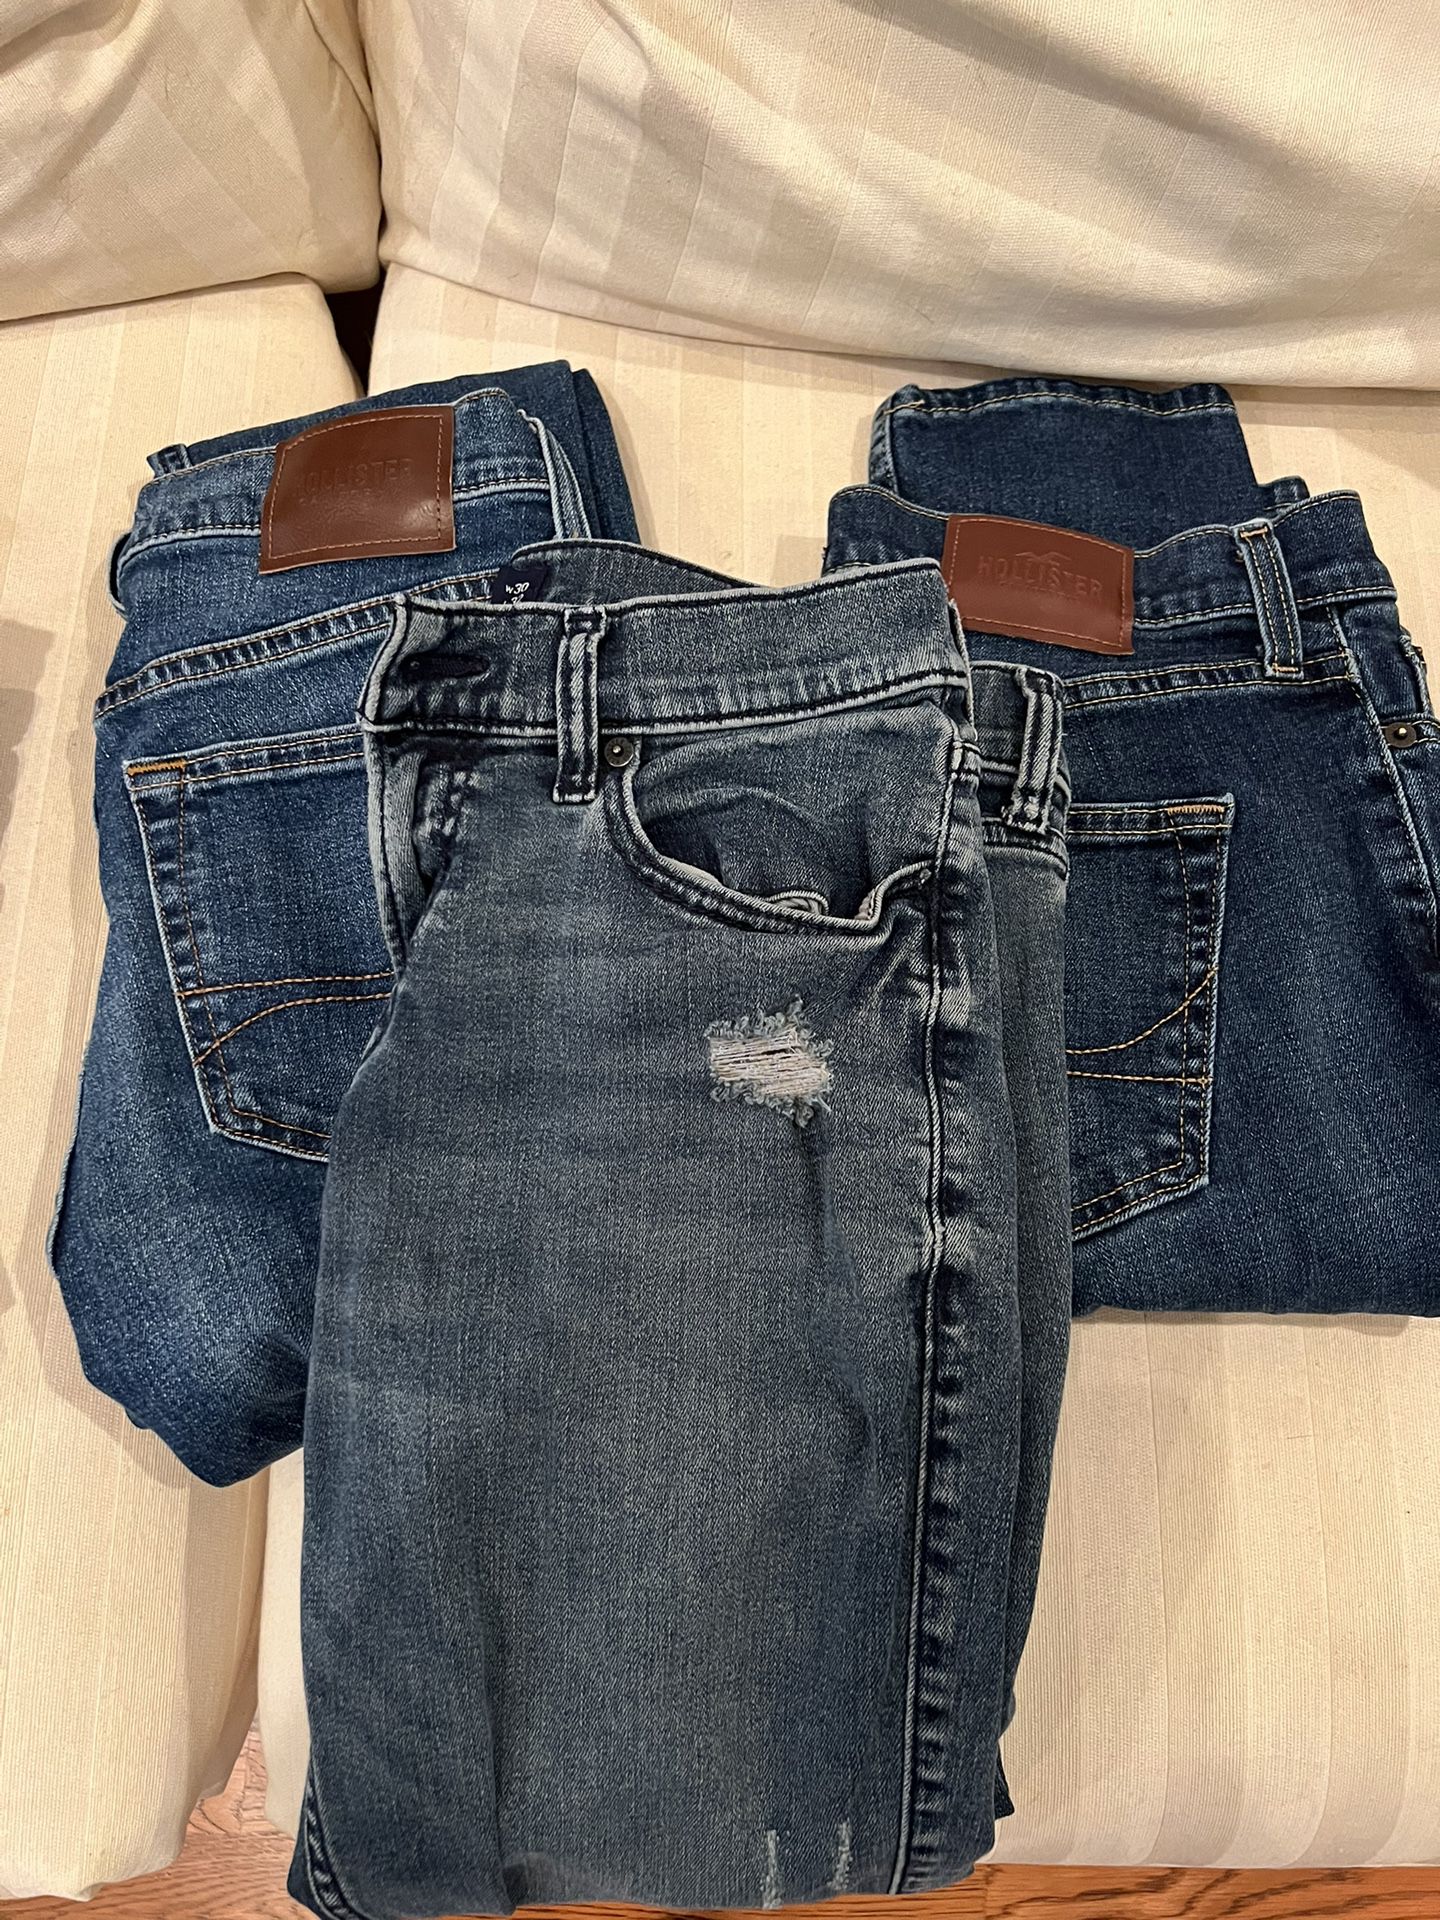 10 Pair Excellent Condition Men’s Designer Jeans; $250 for all 10